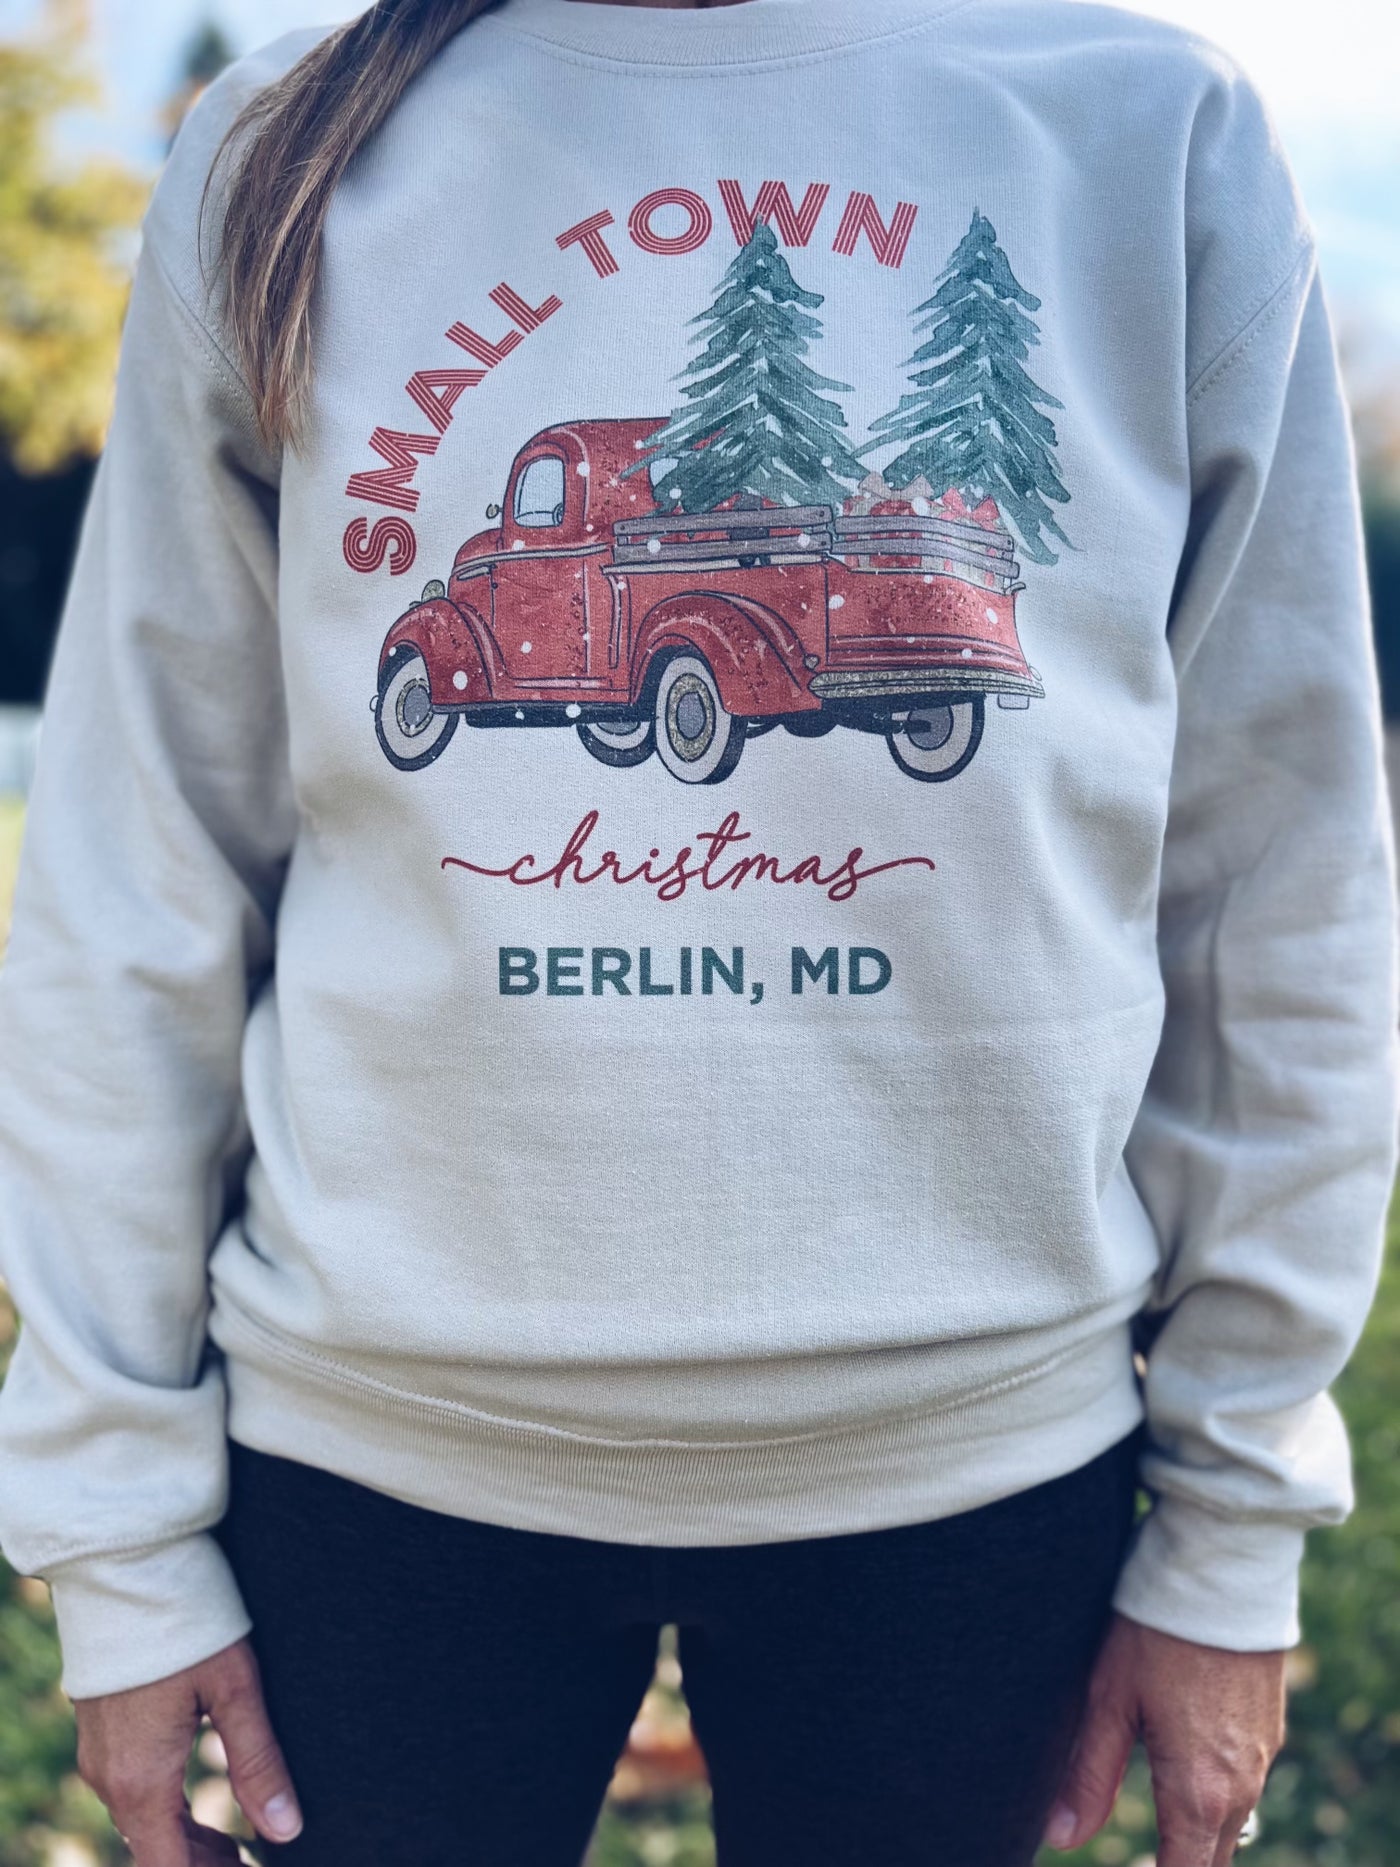 Small Town Christmas Sweatshirt (Berlin, MD)